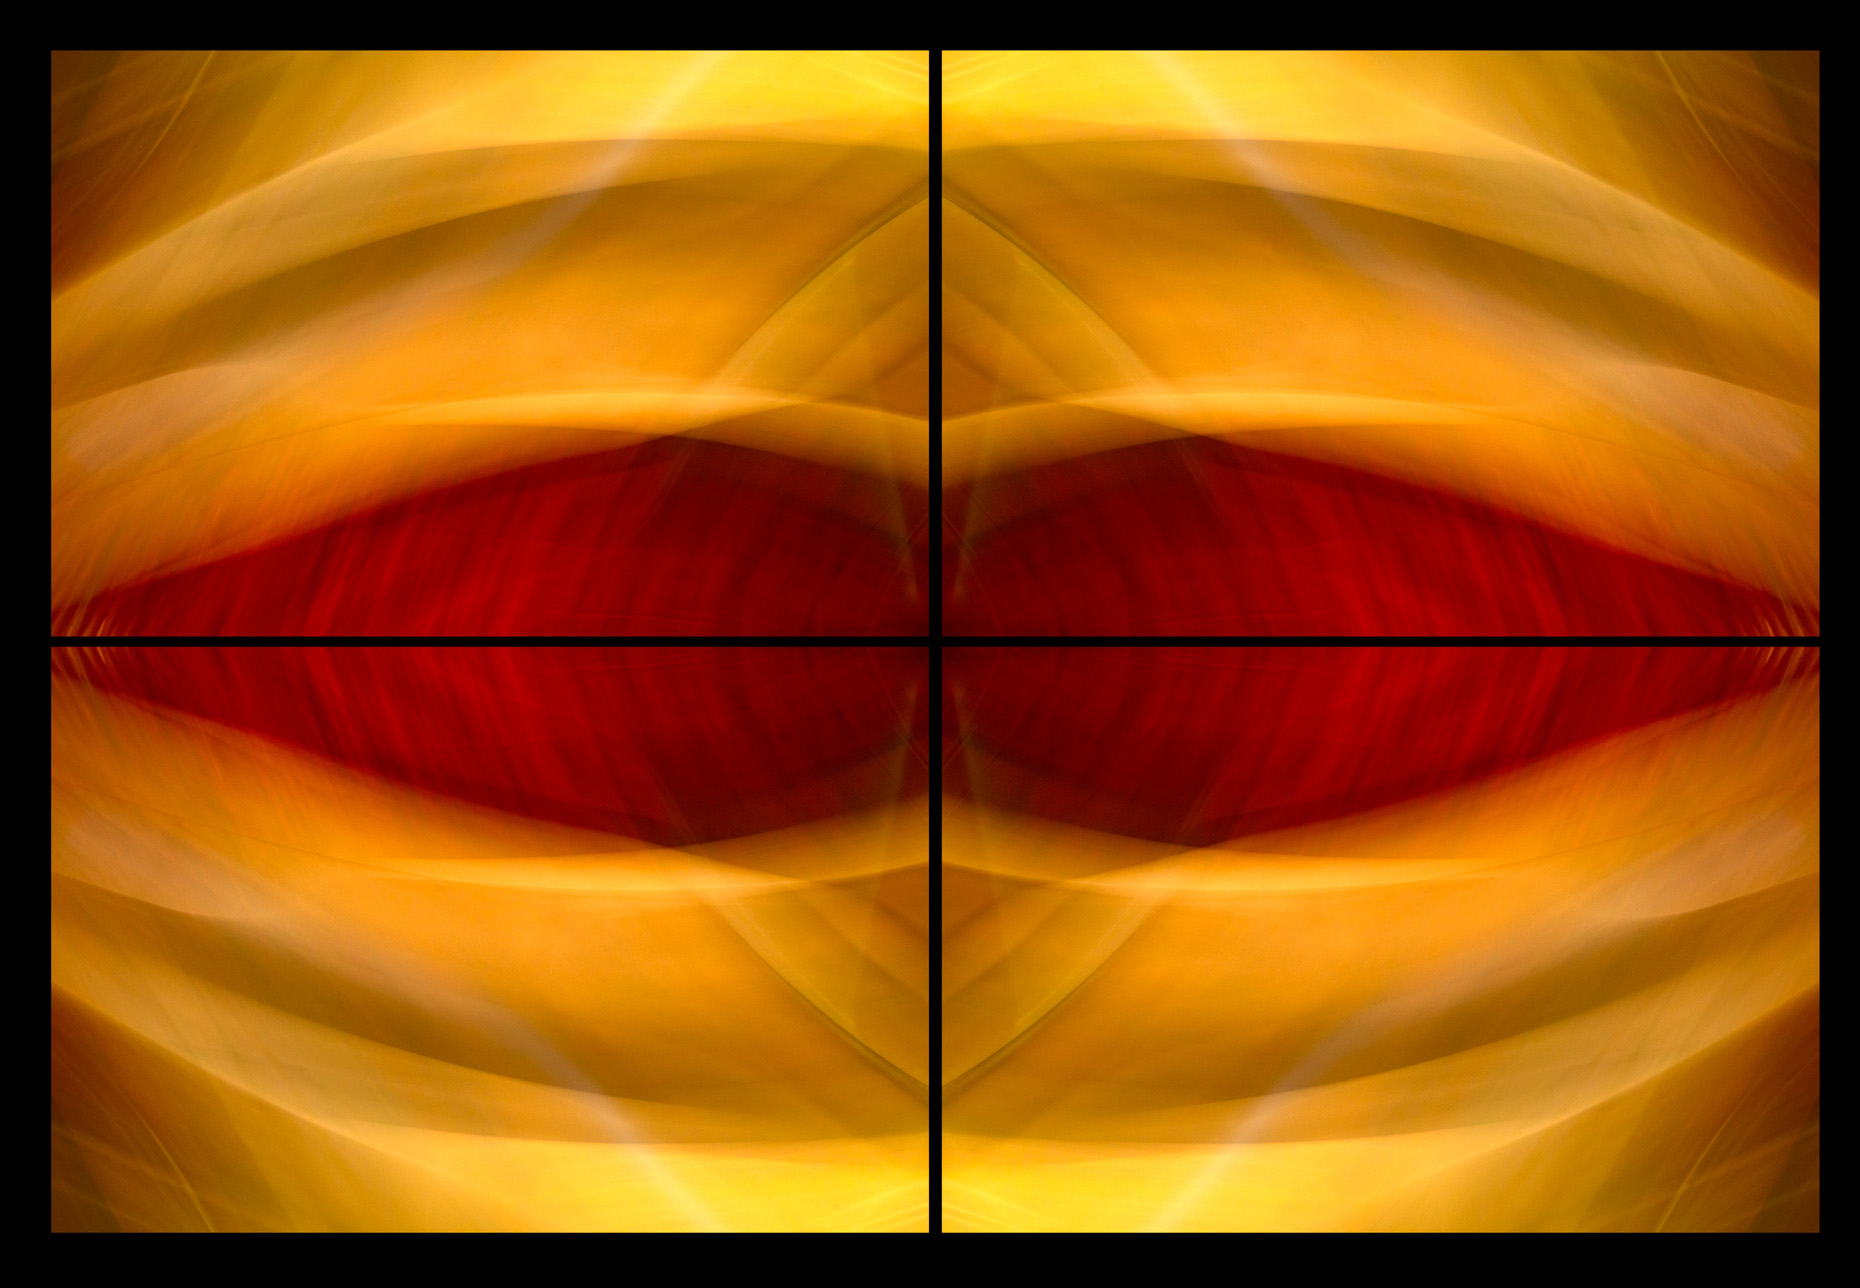 Sensual-Synergy-Abstract-Art-Laria-HiWeb-2.jpg